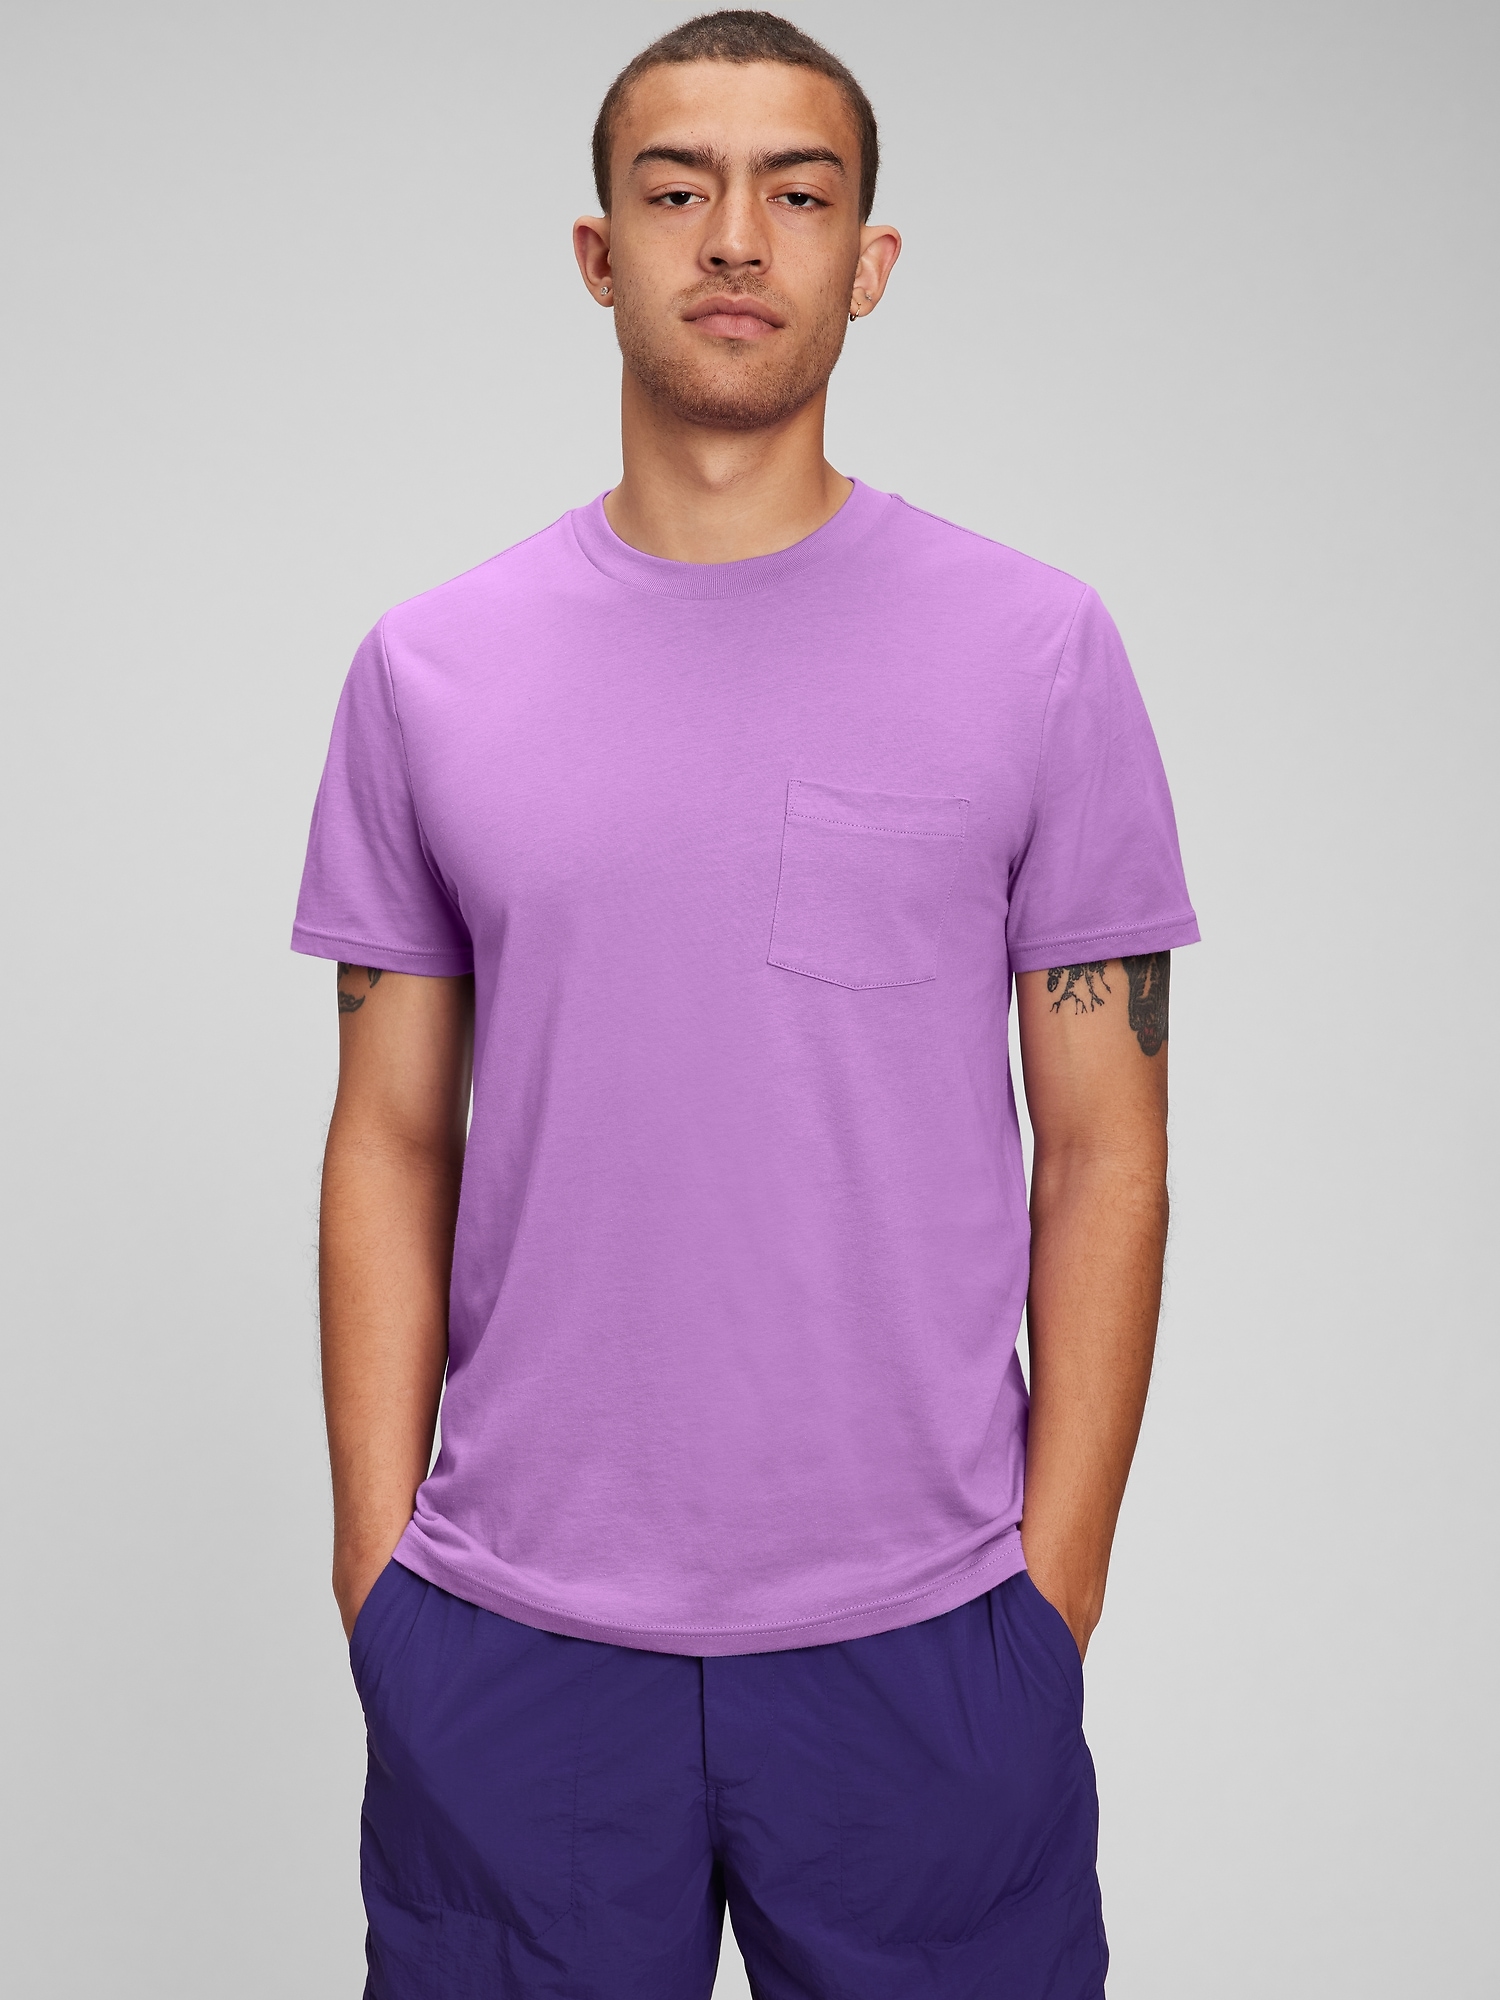 Gap 100% Organic Cotton Pocket T-Shirt purple. 1